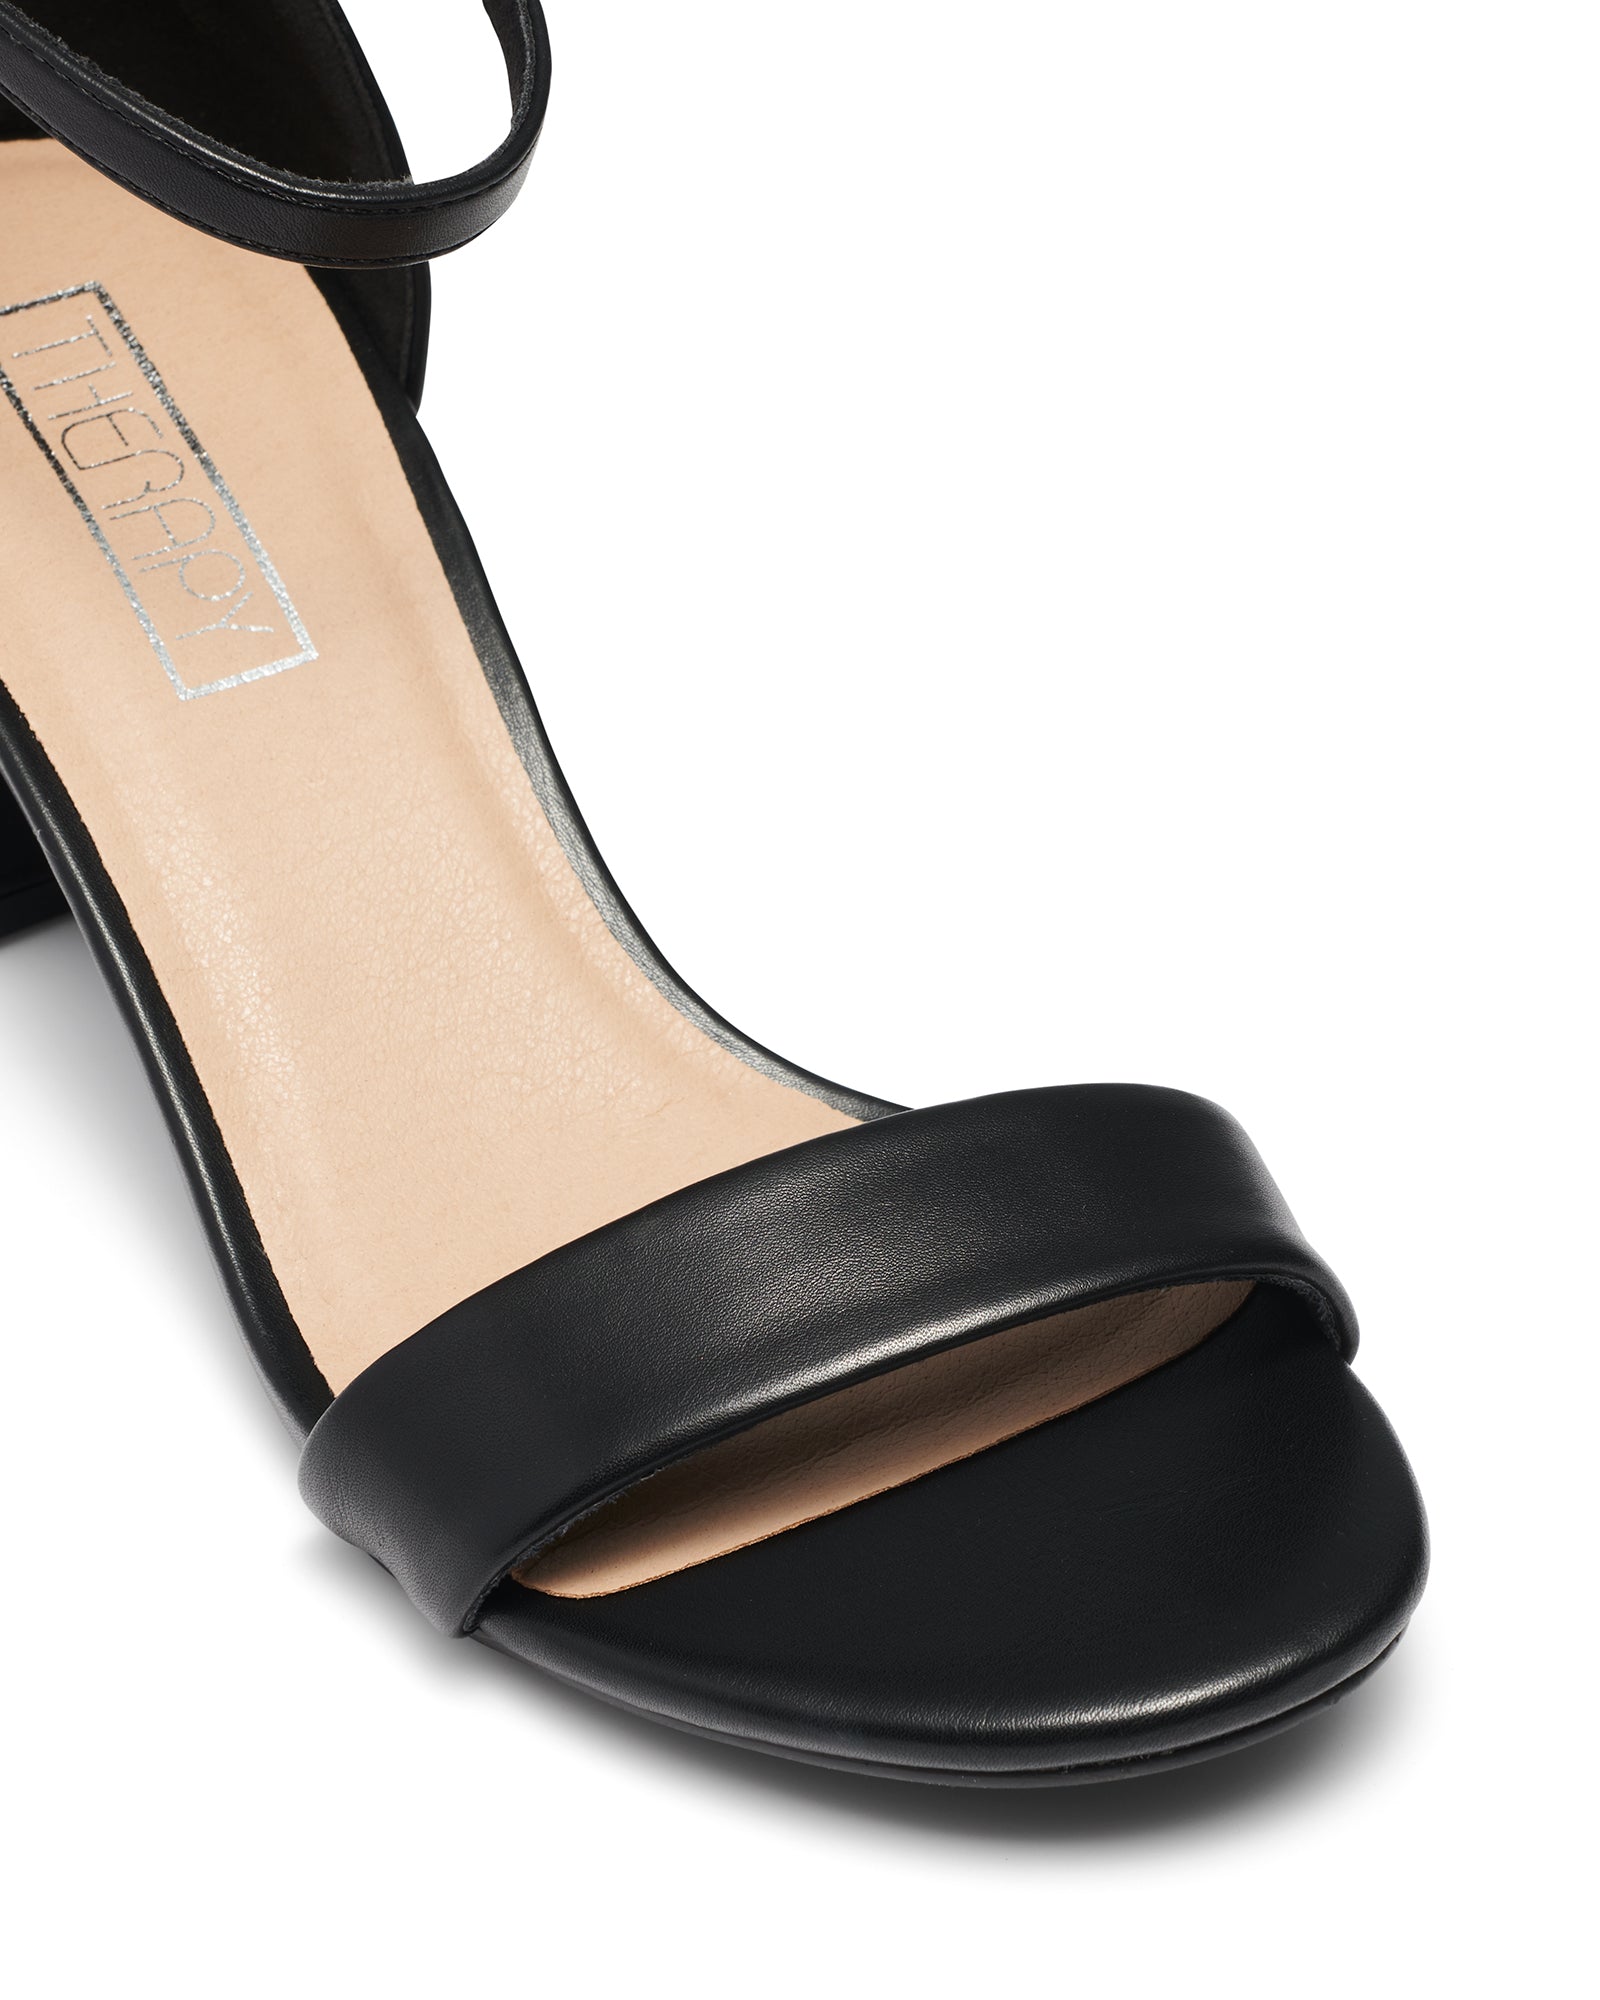 Therapy Shoes Reeves Black | Women's Heels | Sandals | Low Block Heel